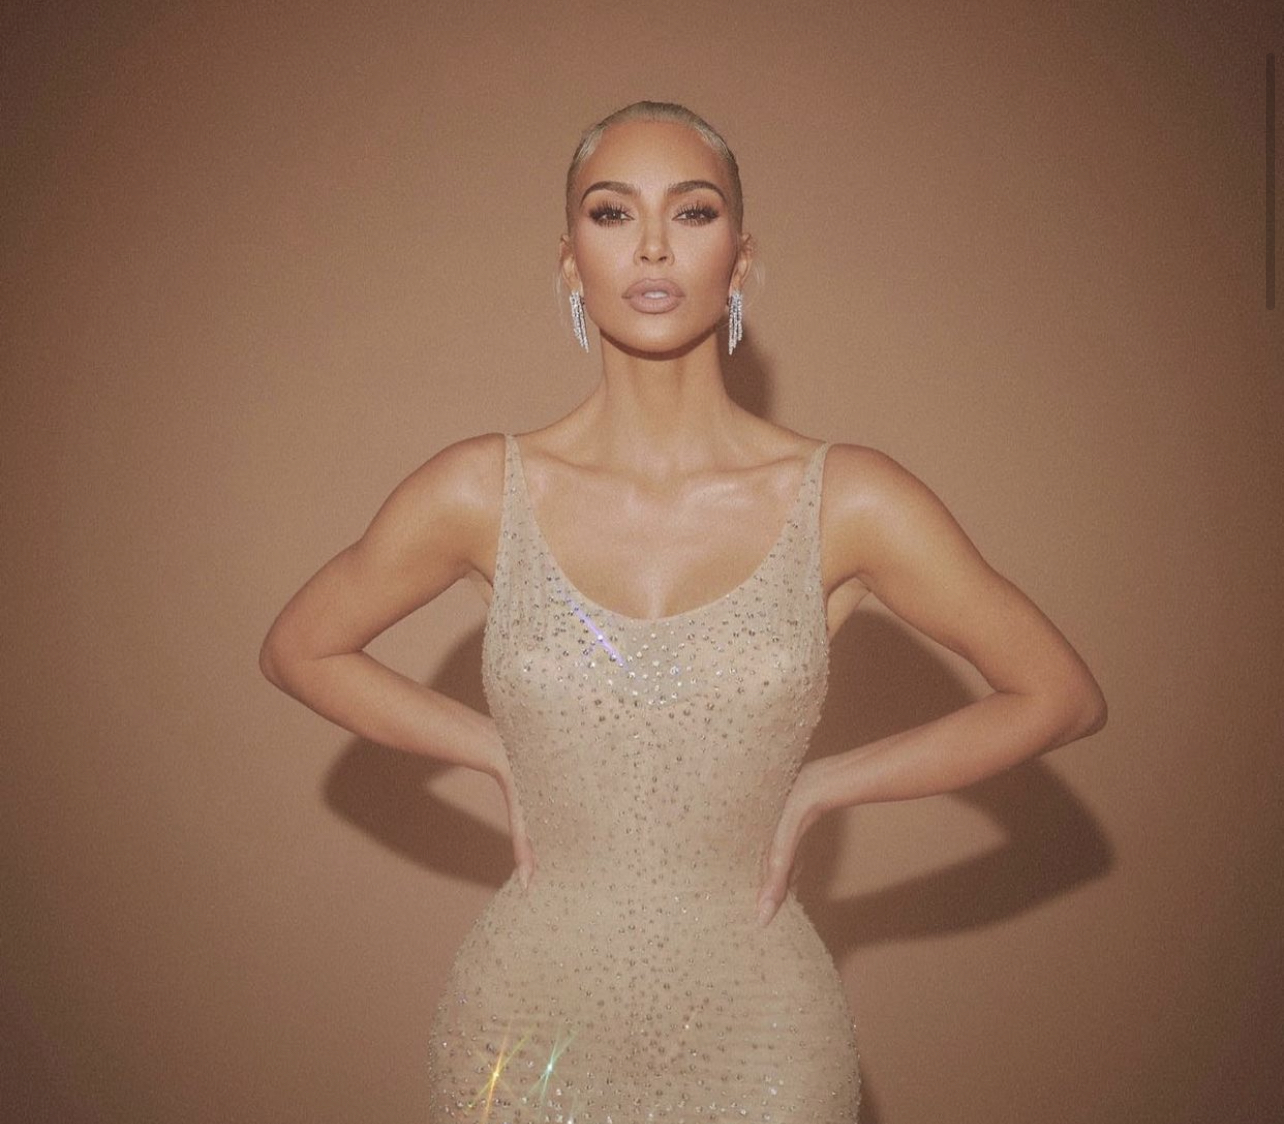 Kim Kardashian: Η επικίνδυνη ματαιοδοξία να χωρέσεις σε ένα φόρεμα 2 νούμερα μικρότερο